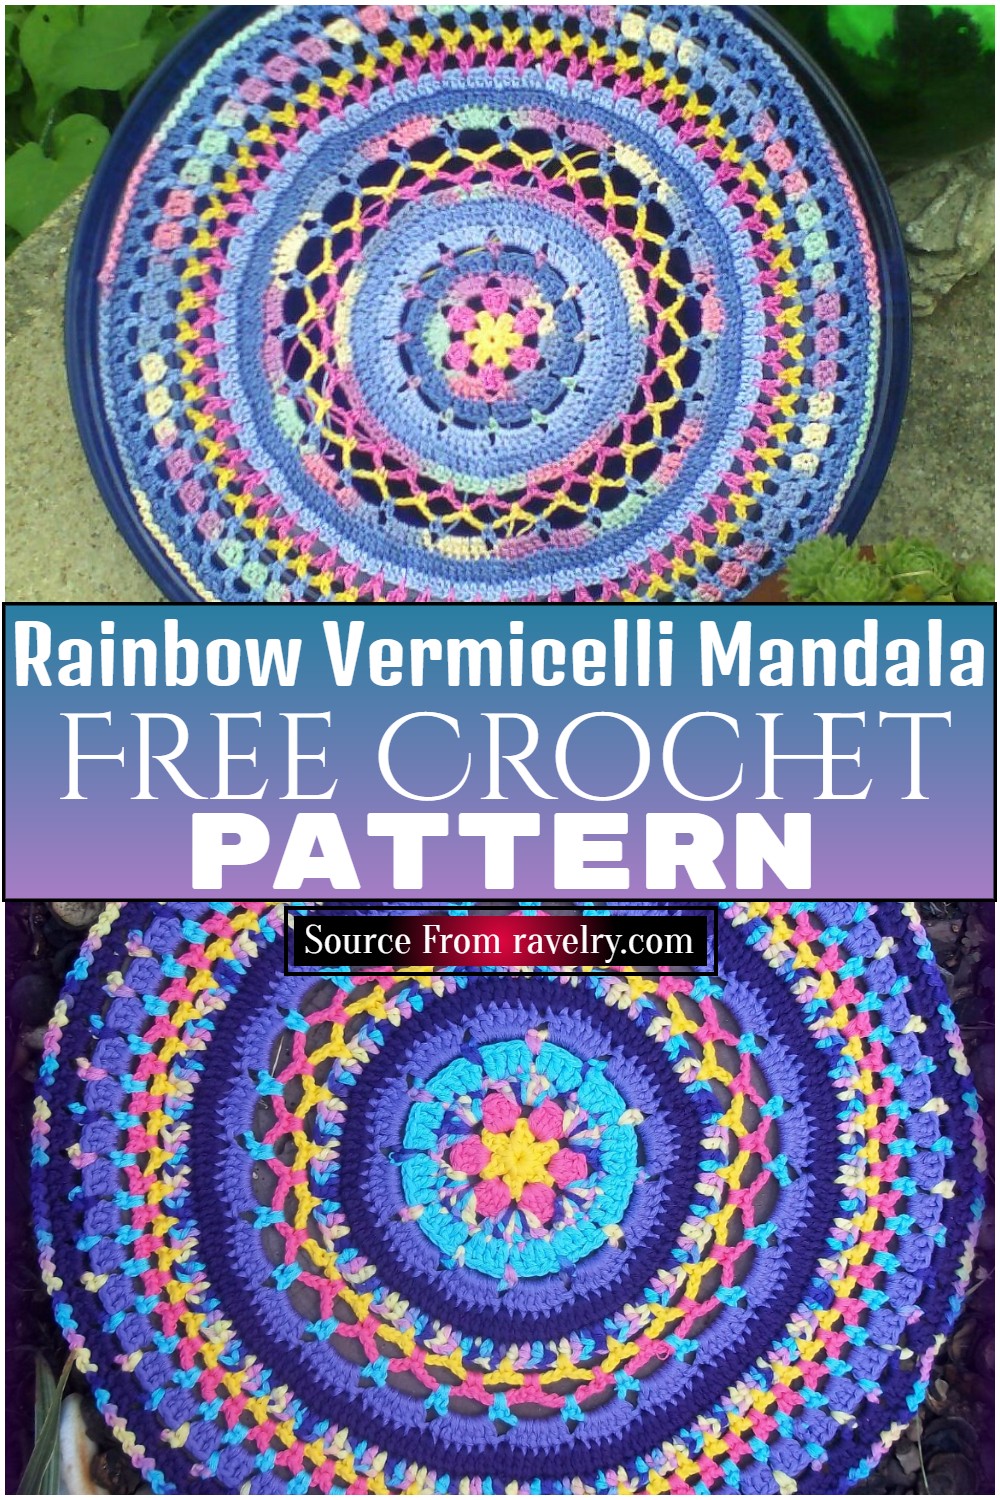 Free Crochet Rainbow Vermicelli Mandala Pattern 1